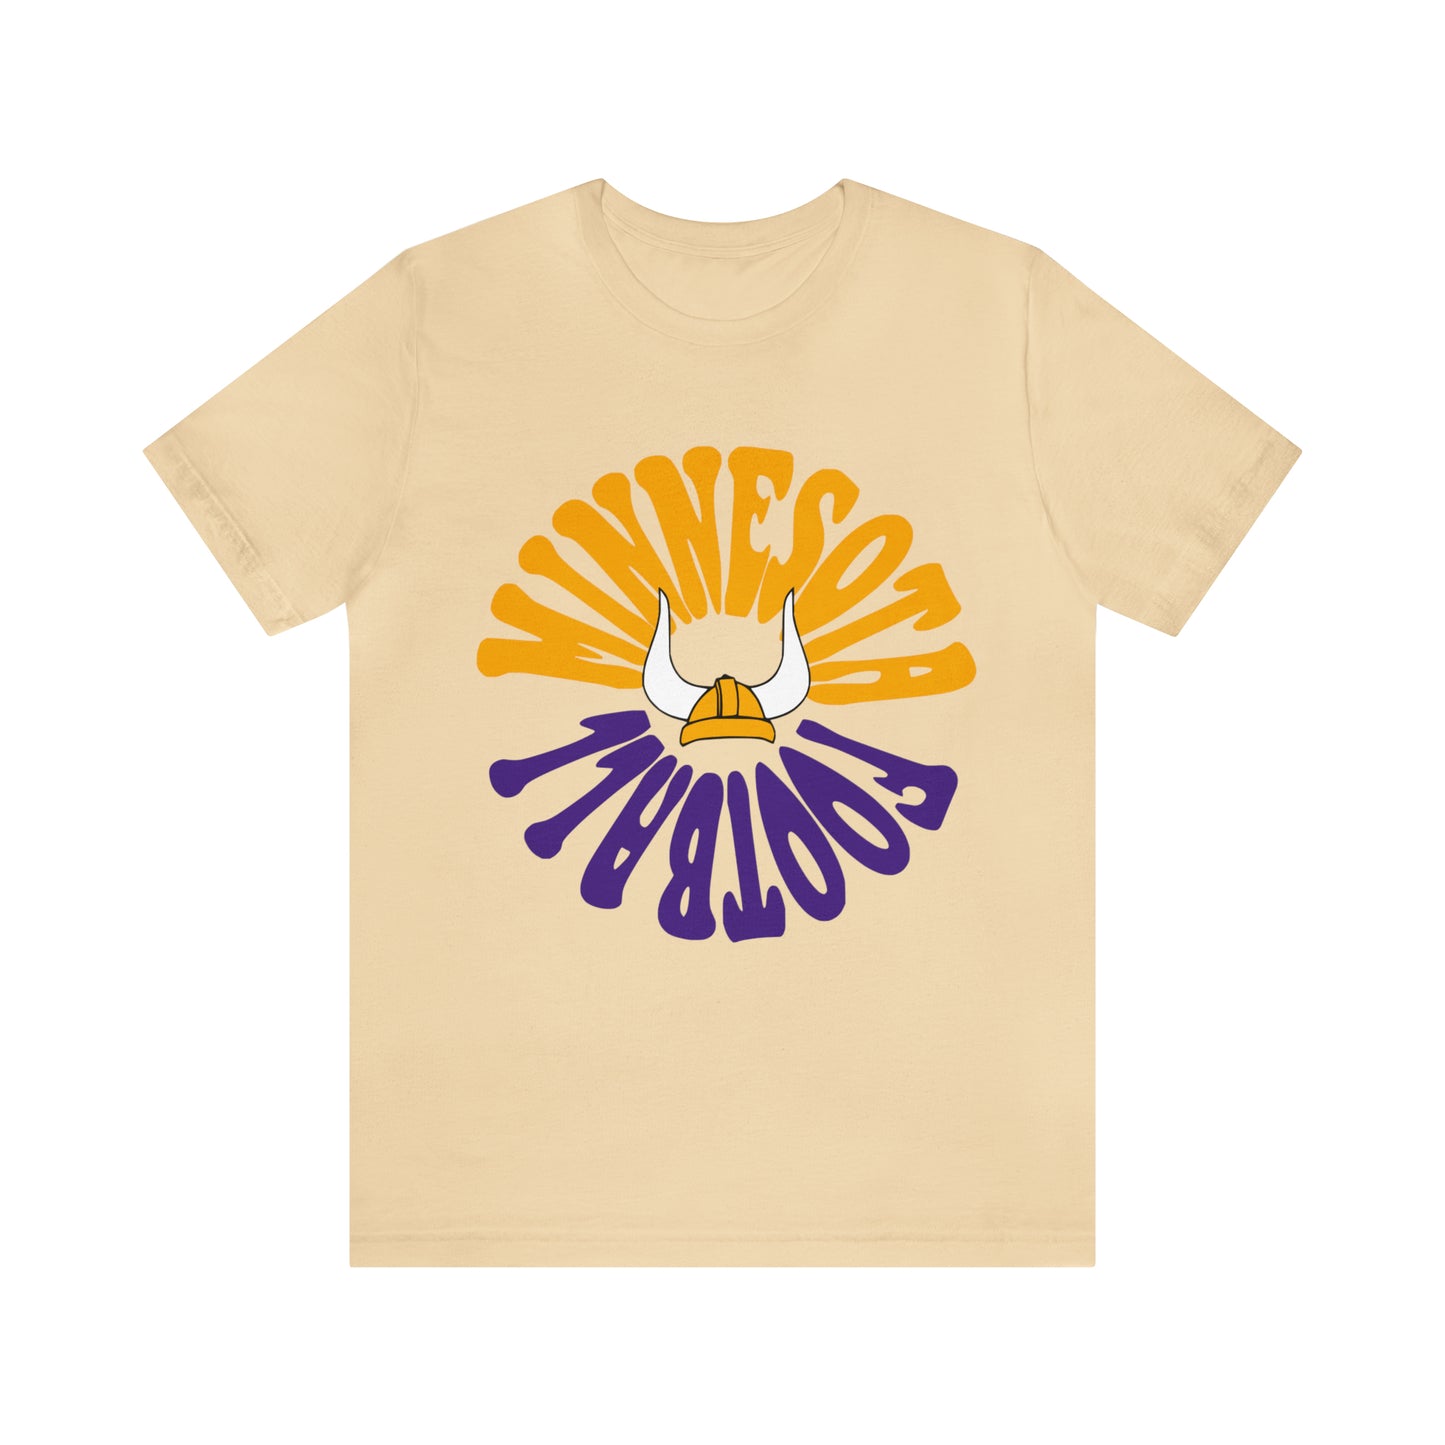 Hippy Retro Minnesota Vikings Tee - 90's Short Sleeve T-Shirt - NFL Football Men's & Women's Apparel - Design 2